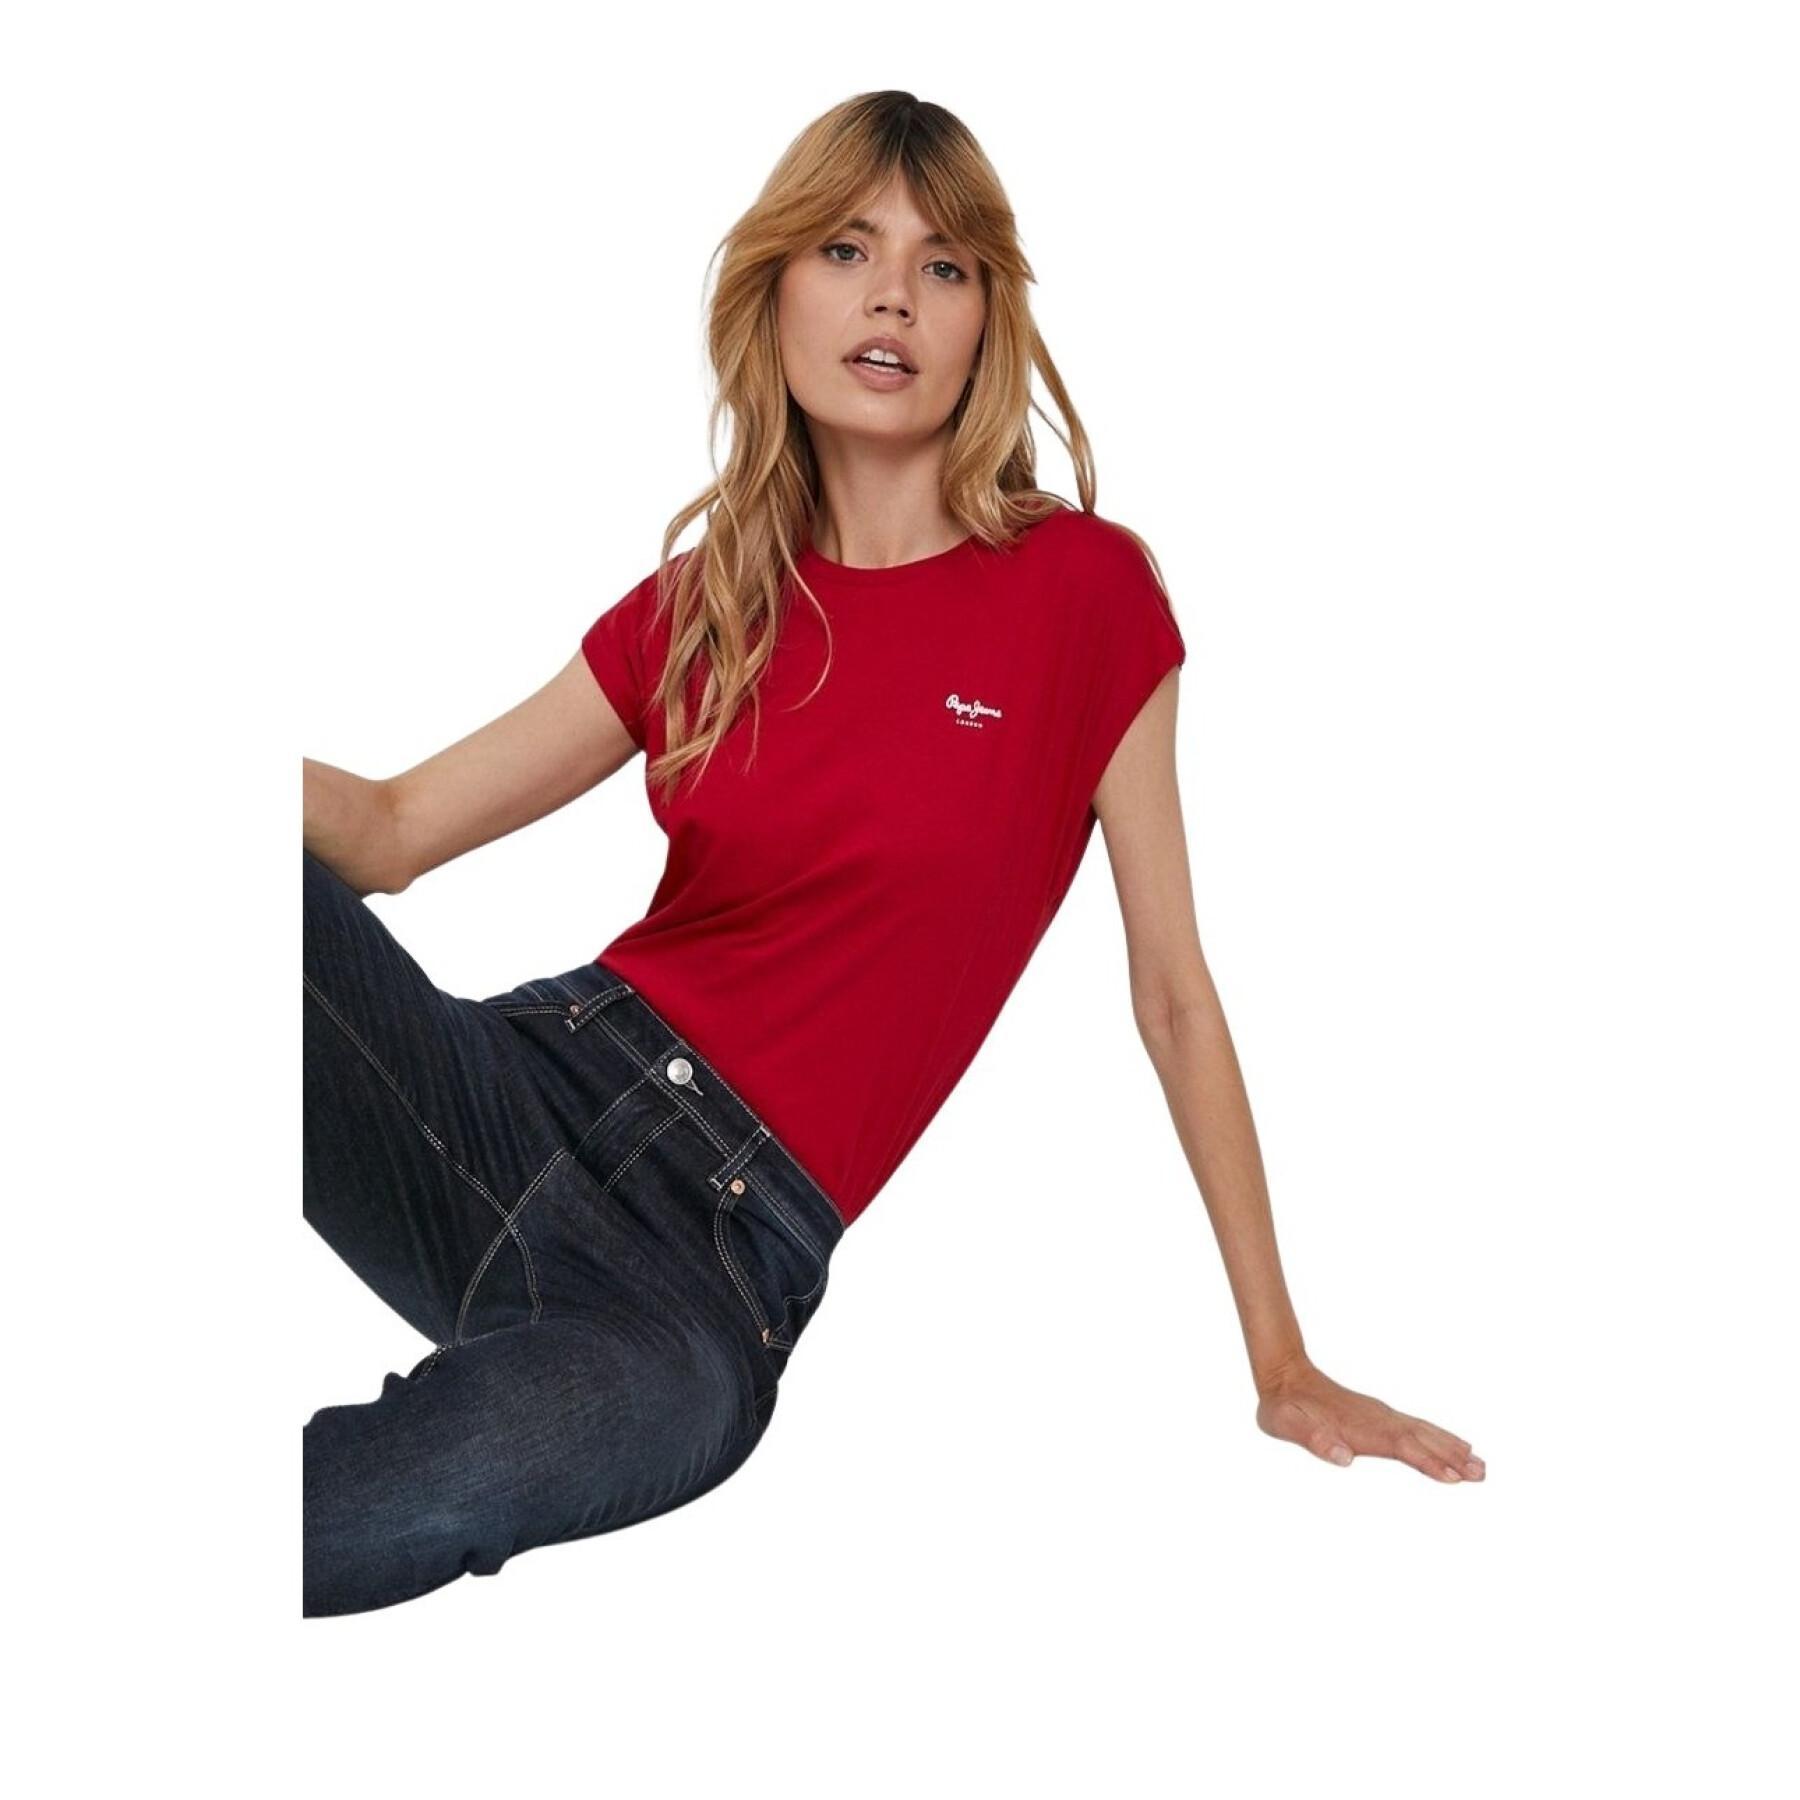 Women's T-shirt Pepe Jeans Bloom